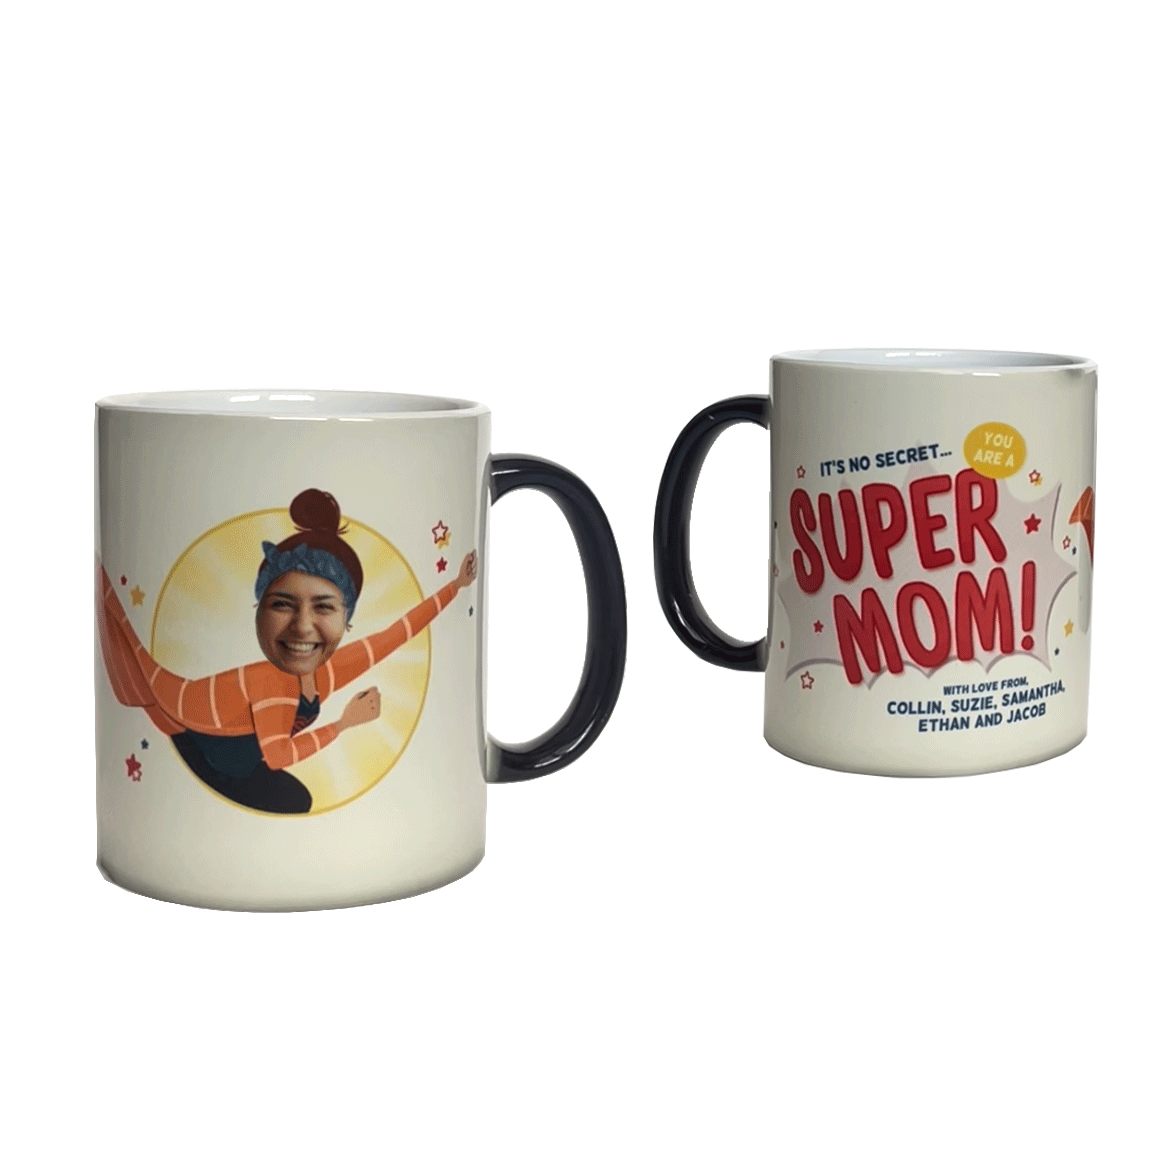 Mom Personalized Mug